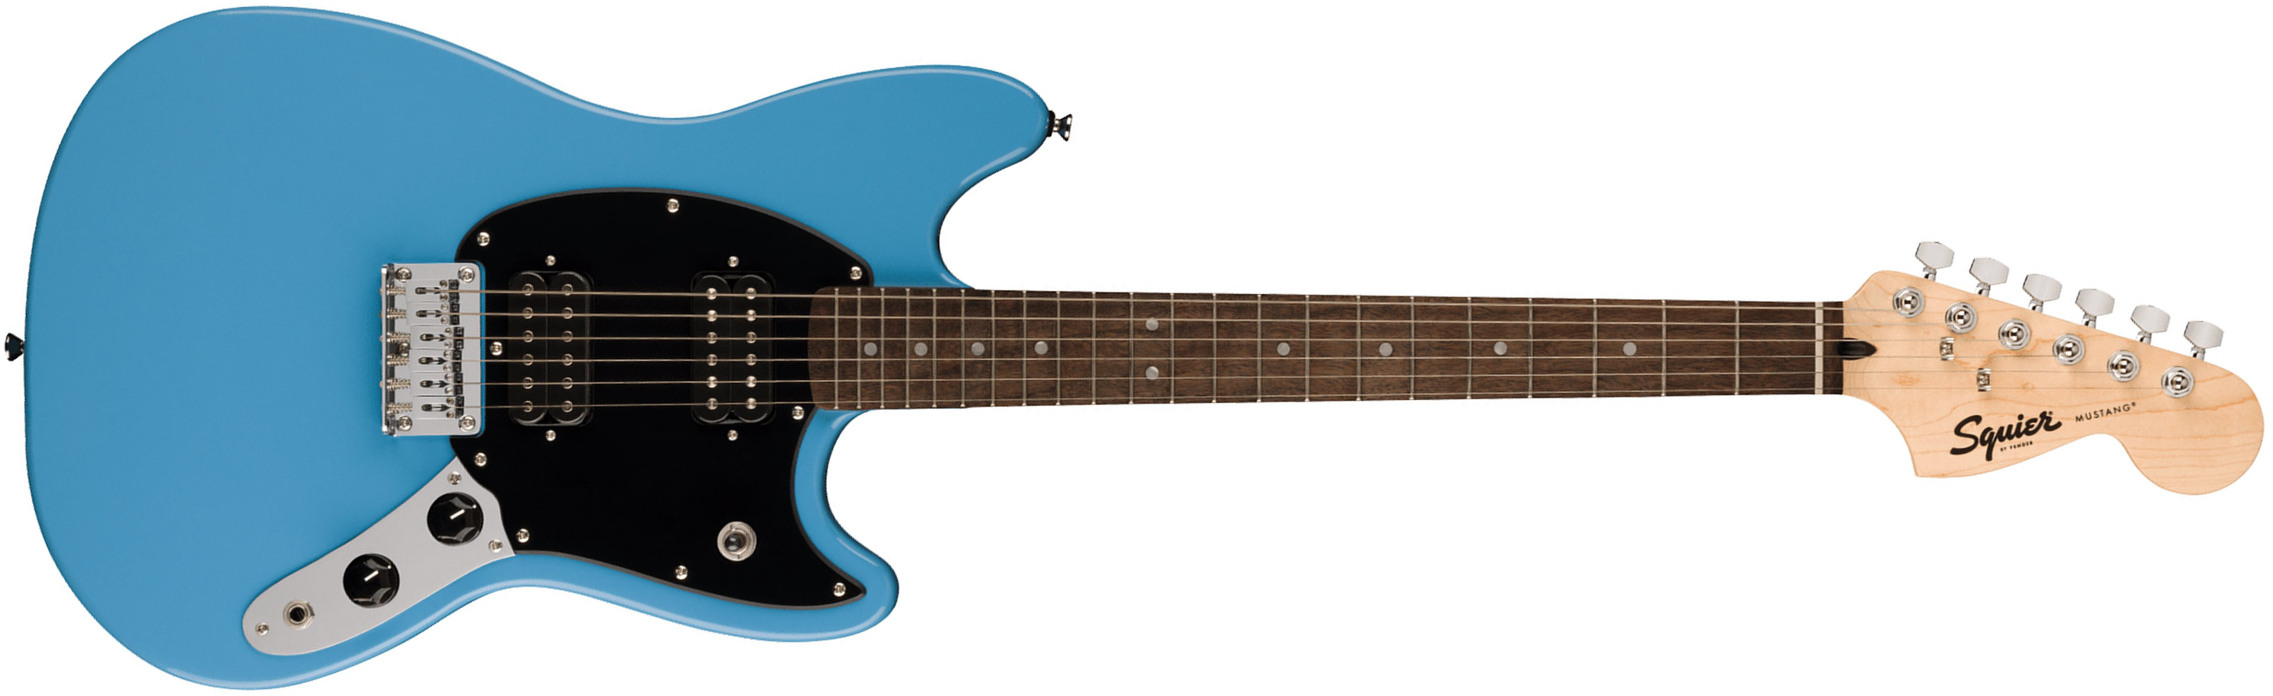 Squier Mustang Sonic Hh 2h Ht Lau - California Blue - Retro rock electric guitar - Main picture